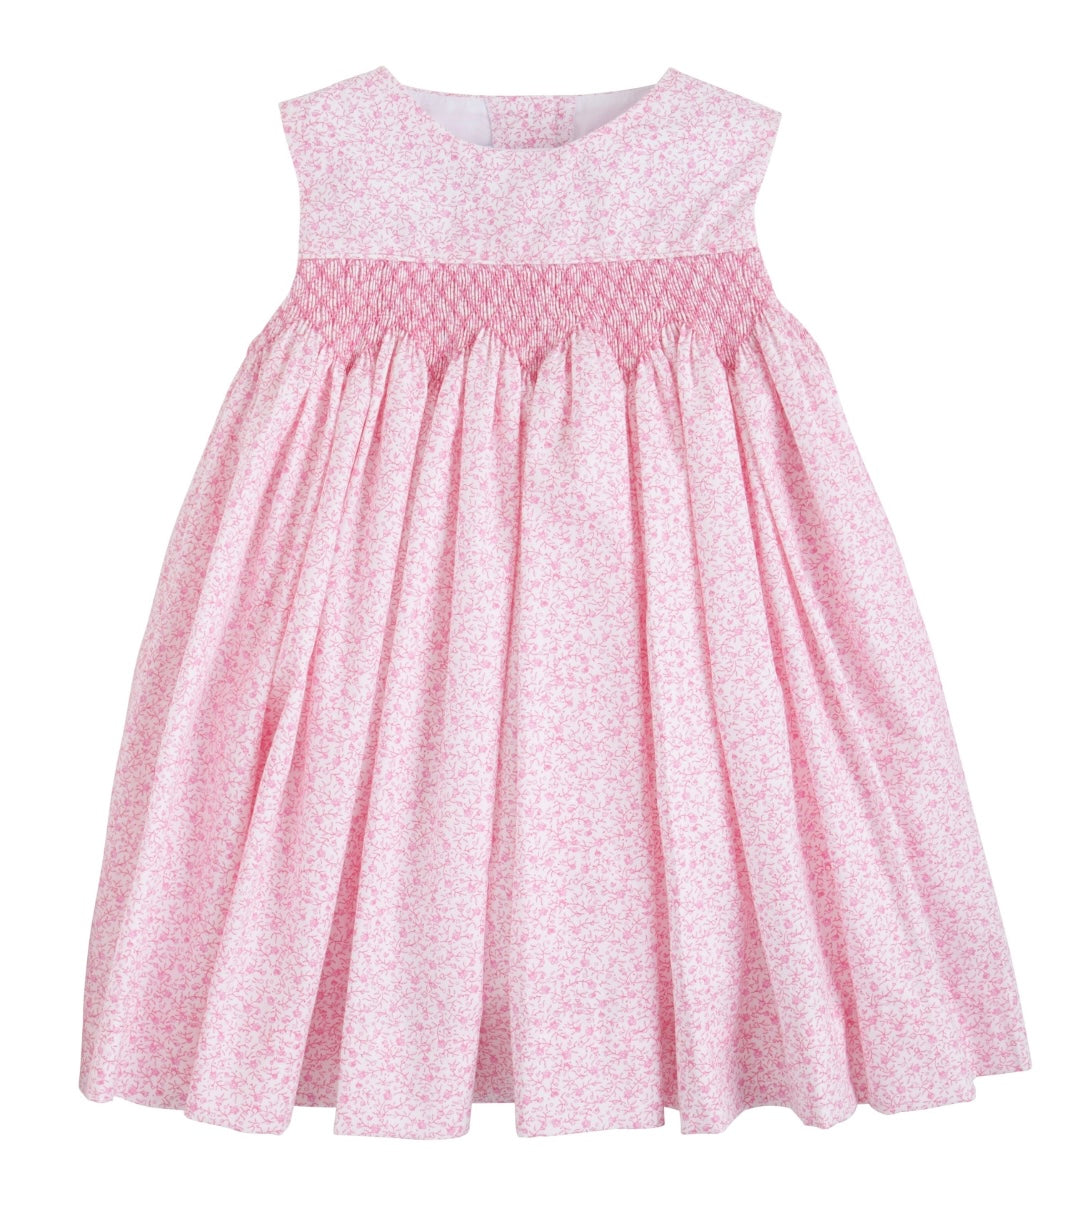 Simply Smocked Dress - Pink Vinings